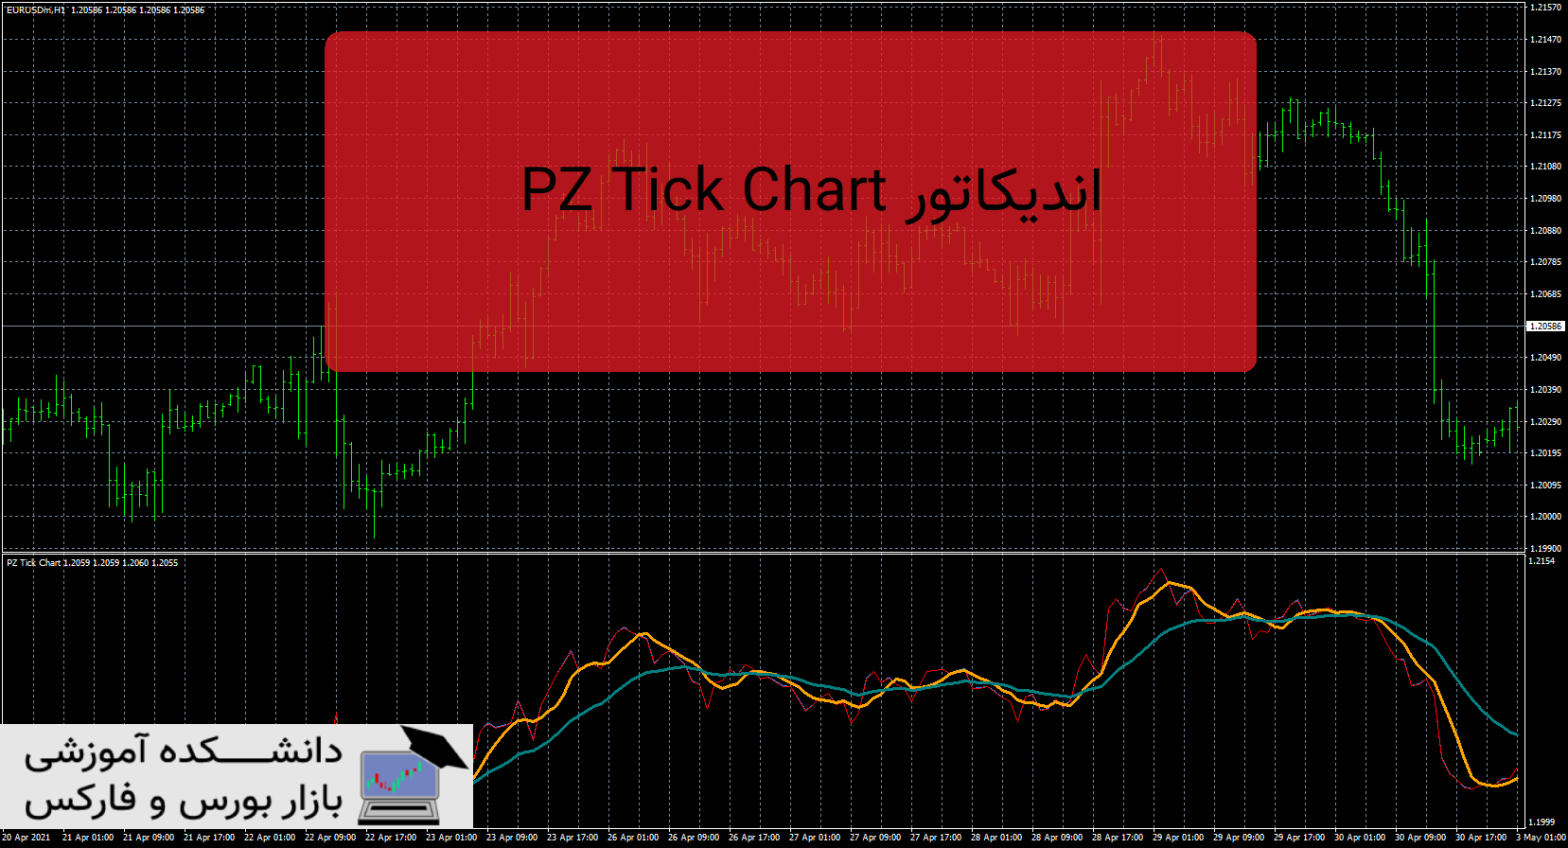 PZ Tick Chart دانلود و معرفی اندیکاتور